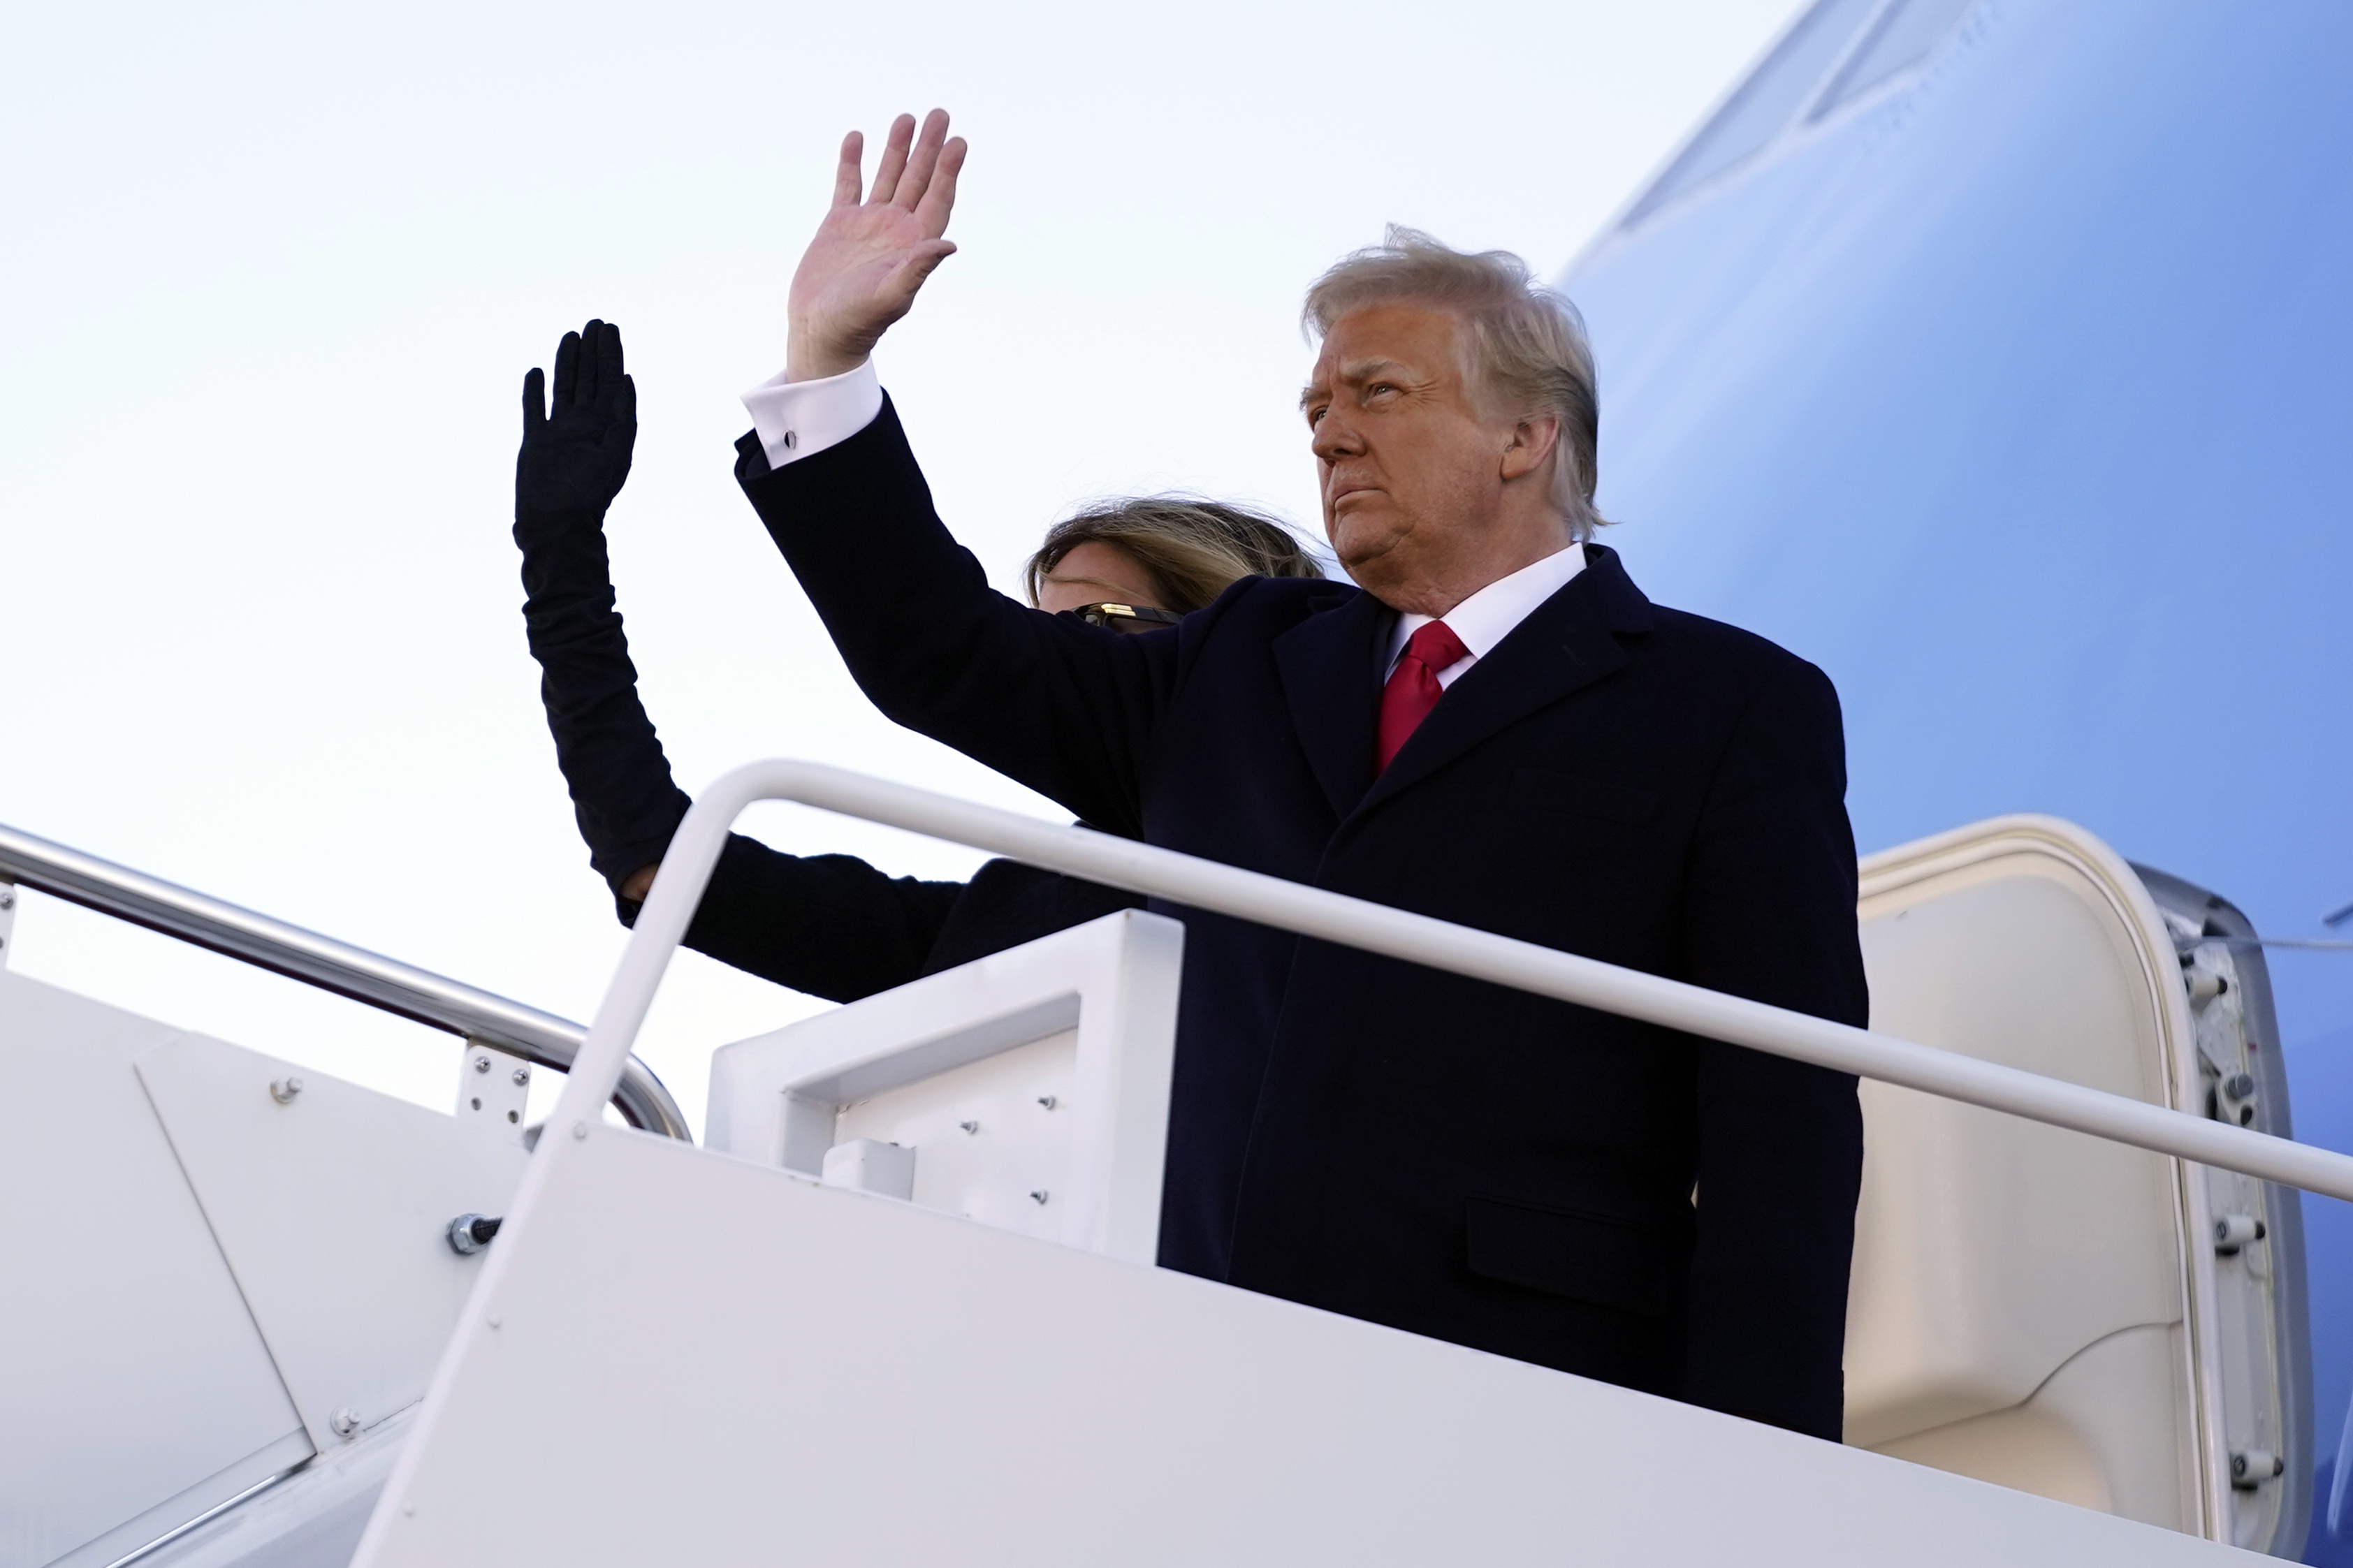 Donald Trump waving goodbye